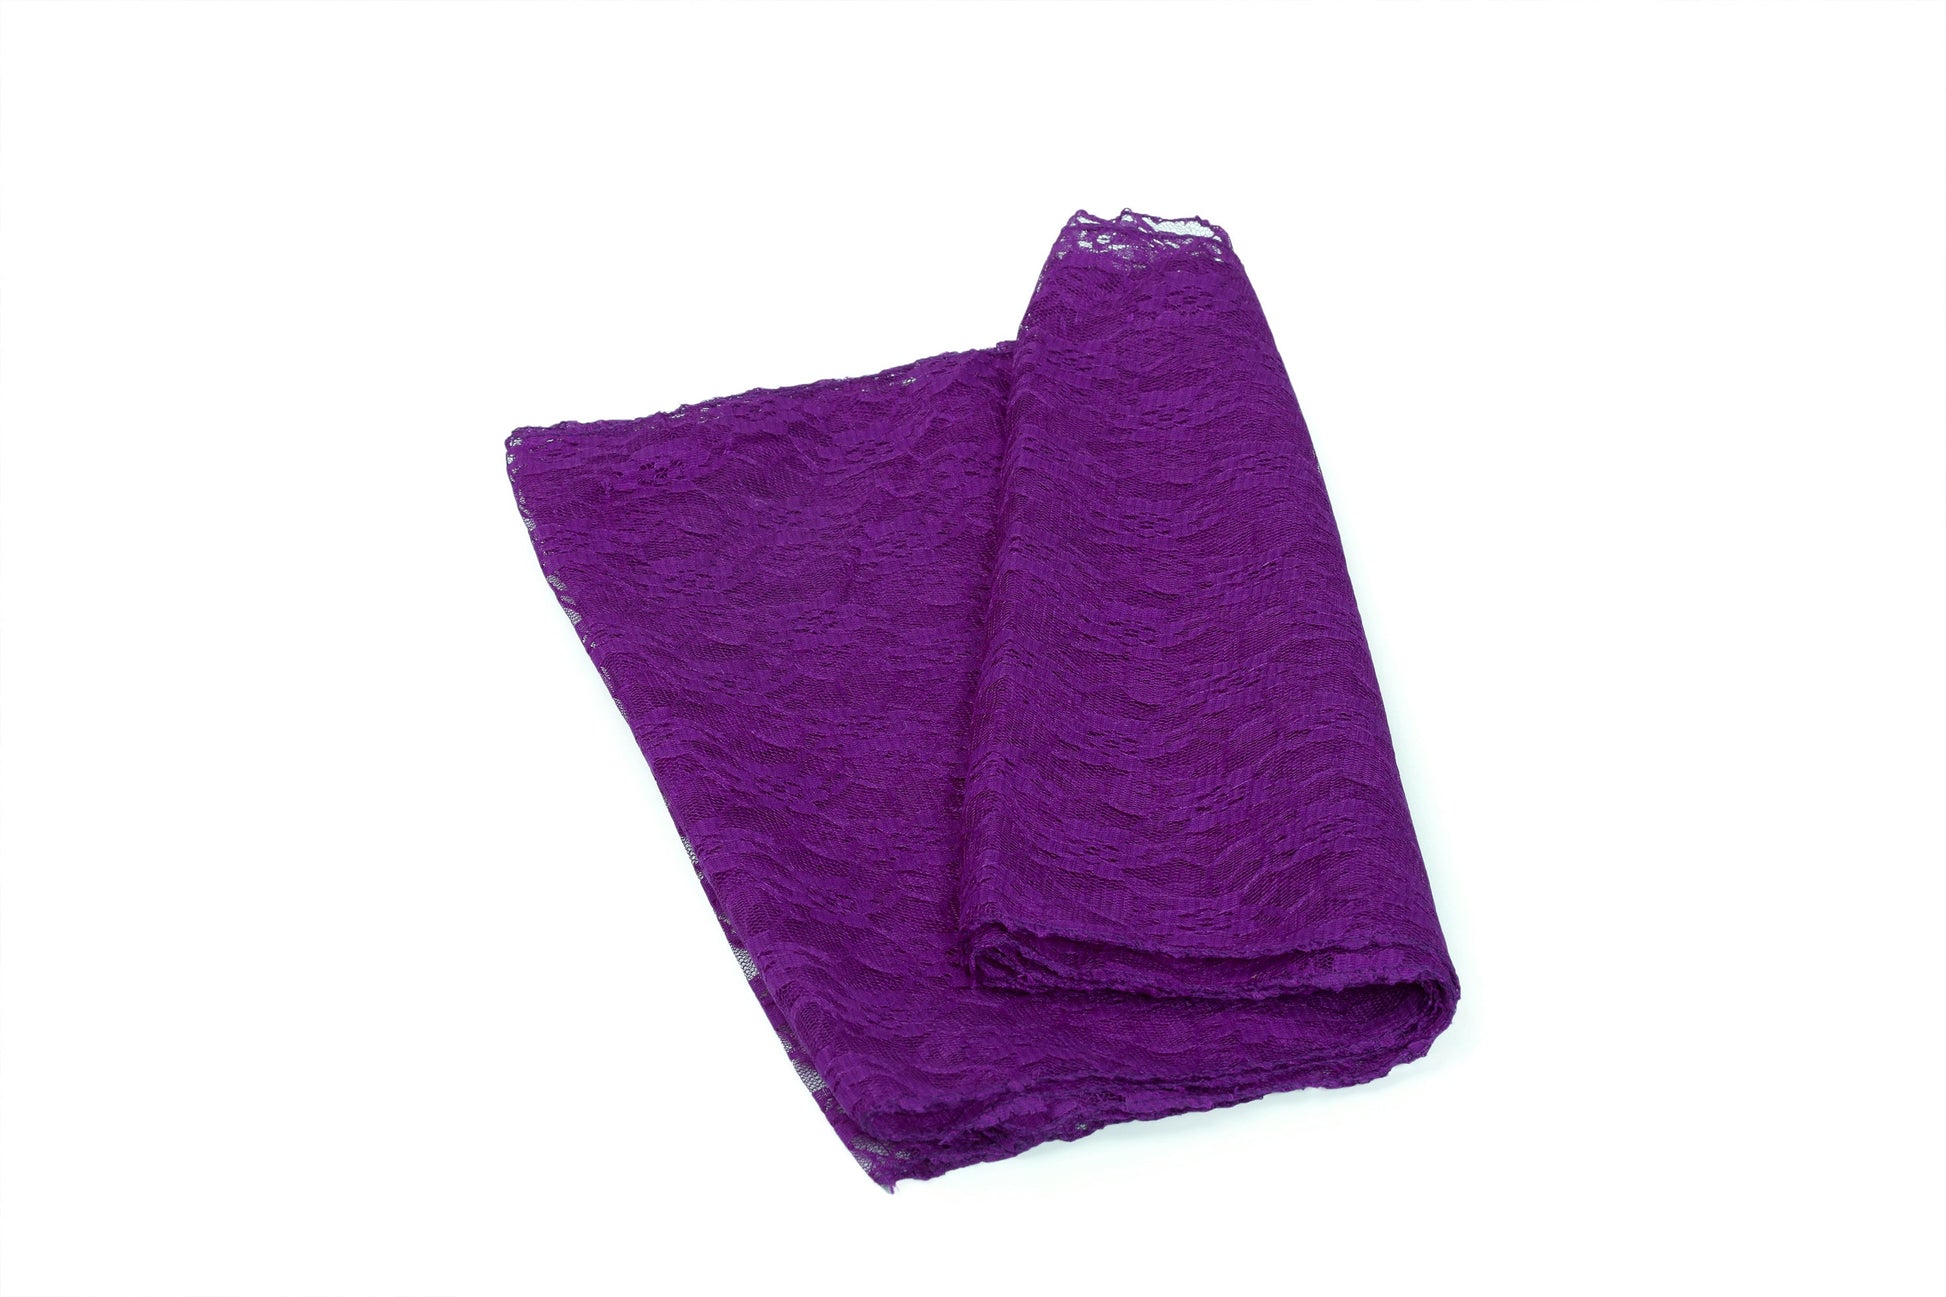 Cadbury Purple,67f3b131-87c7-422b-a03f-a1051c248cda